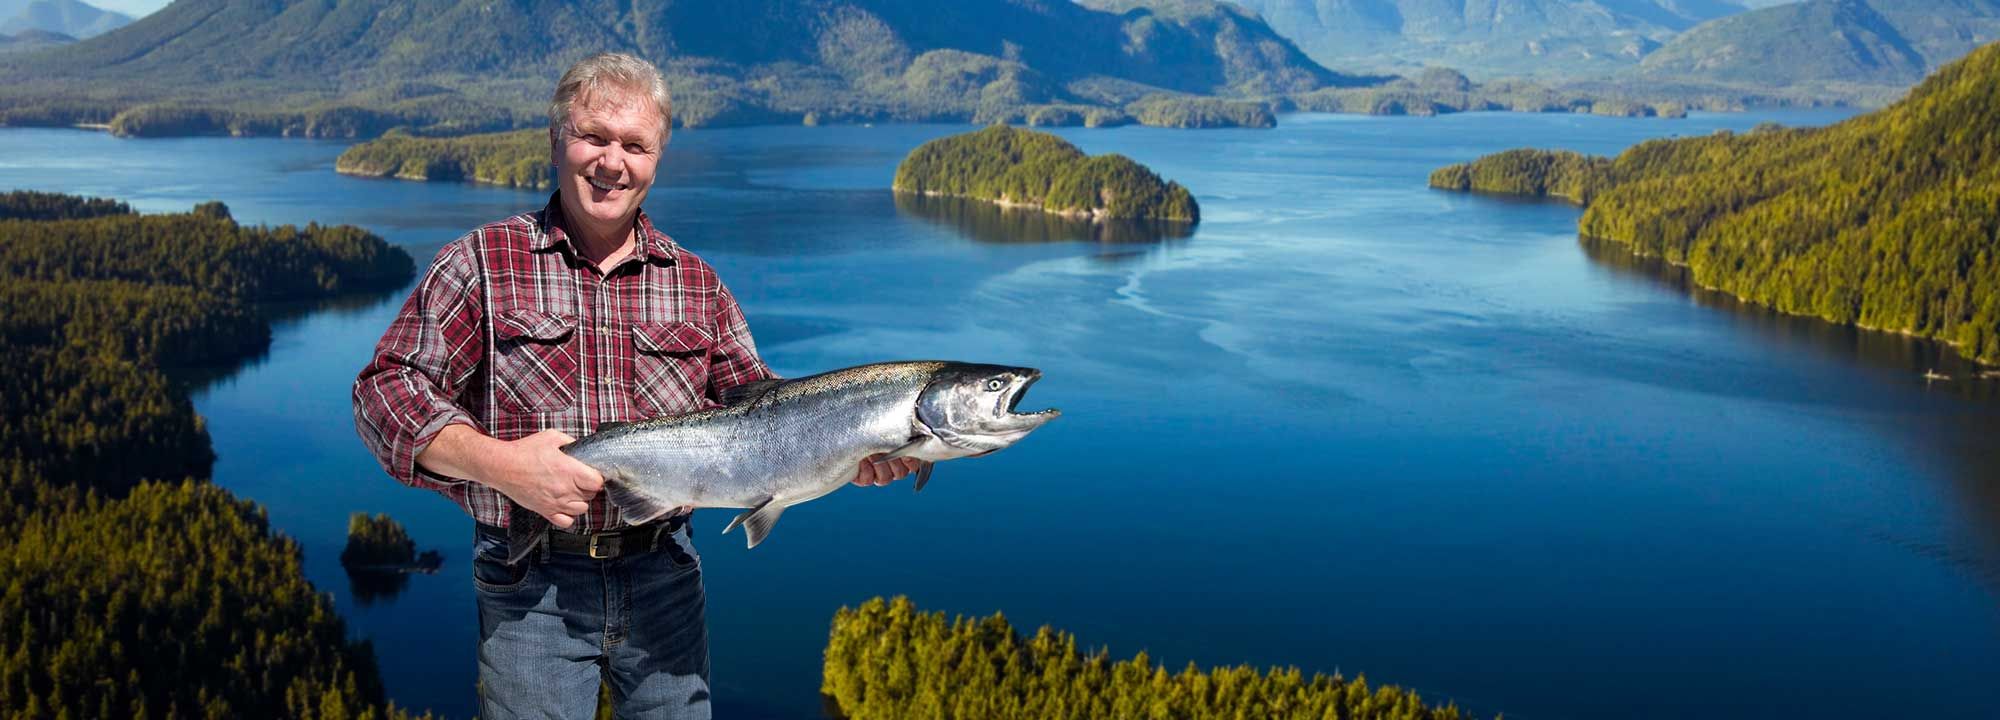 Salmon Eye Charters -50lbs a day guarantee - Fishing Ucluelet BC